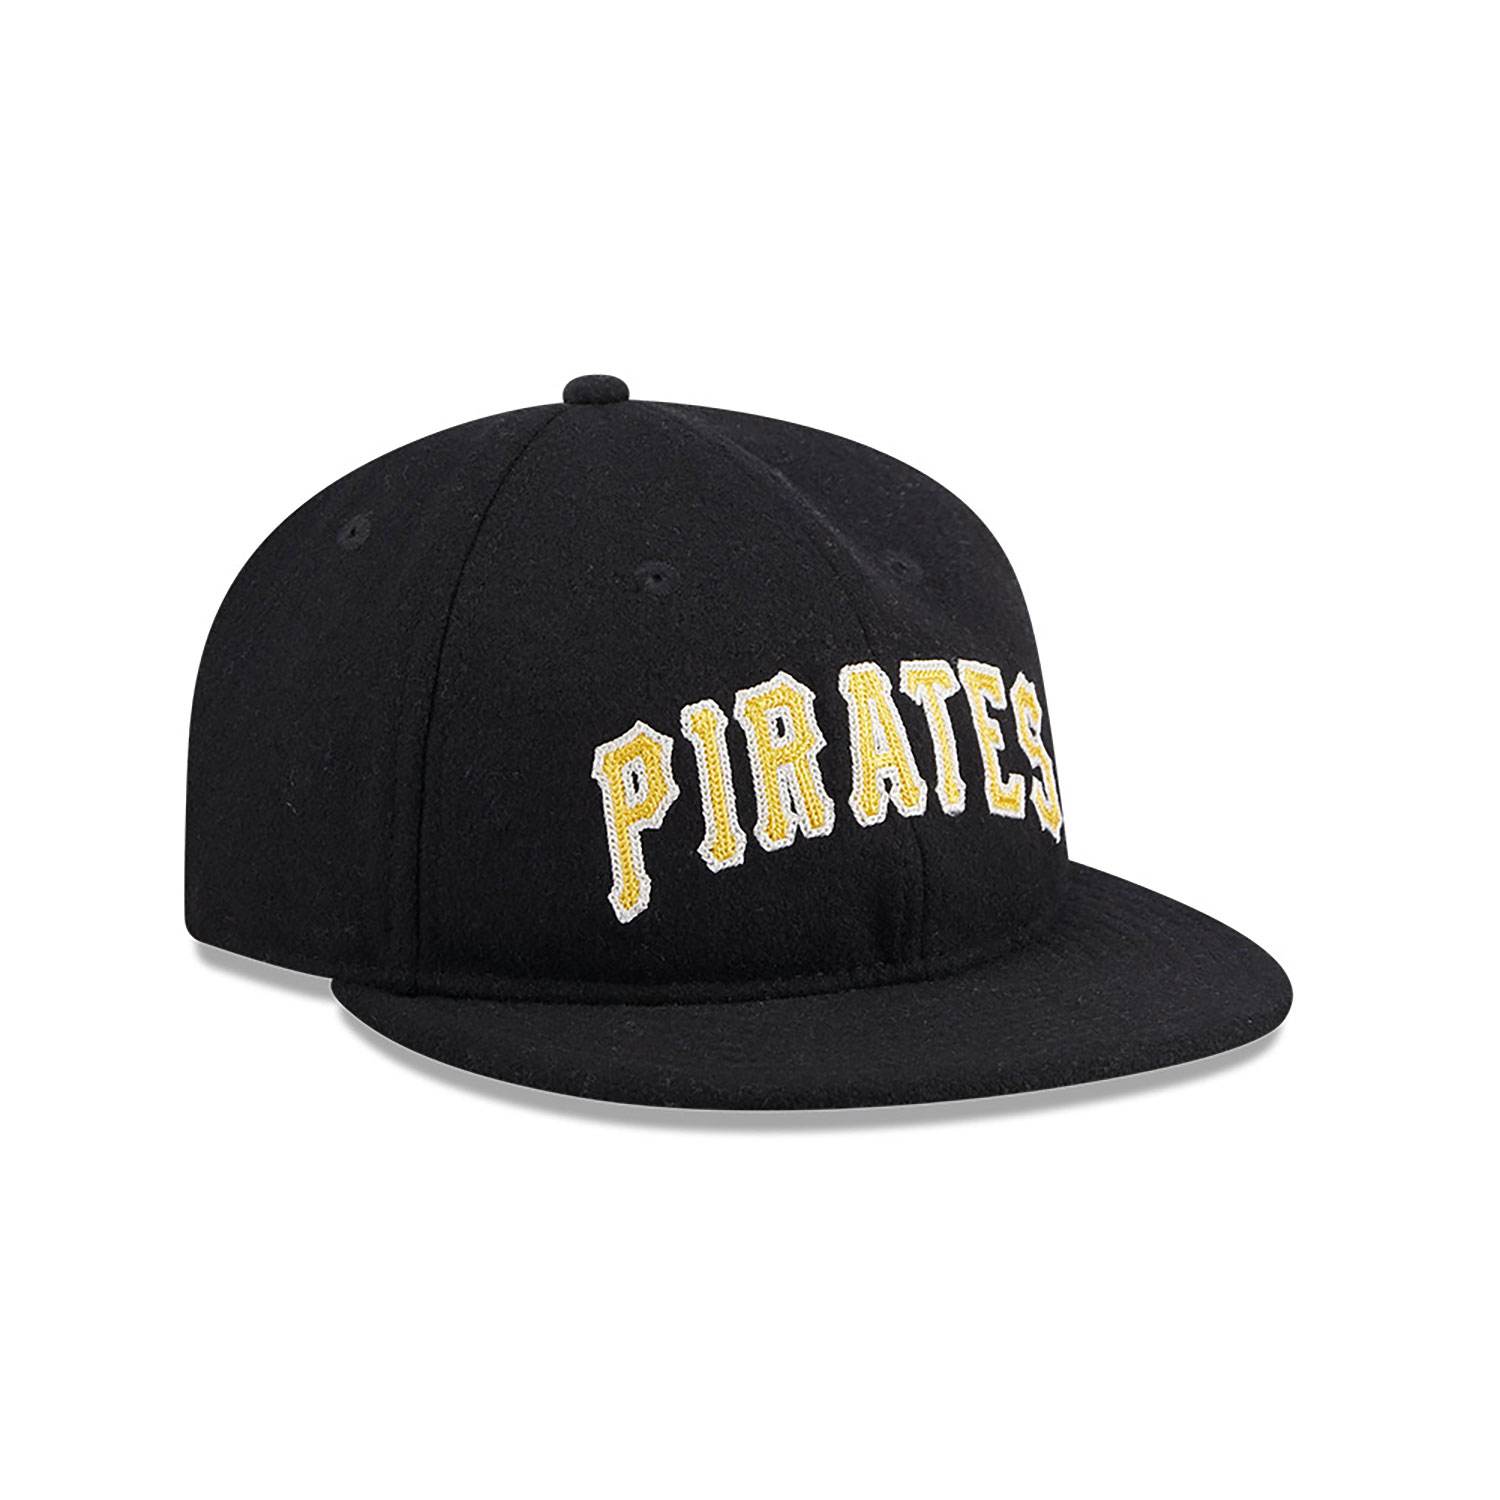 Pittsburgh Pirates Melton Wool Black Retro Crown 9FIFTY Strapback Cap